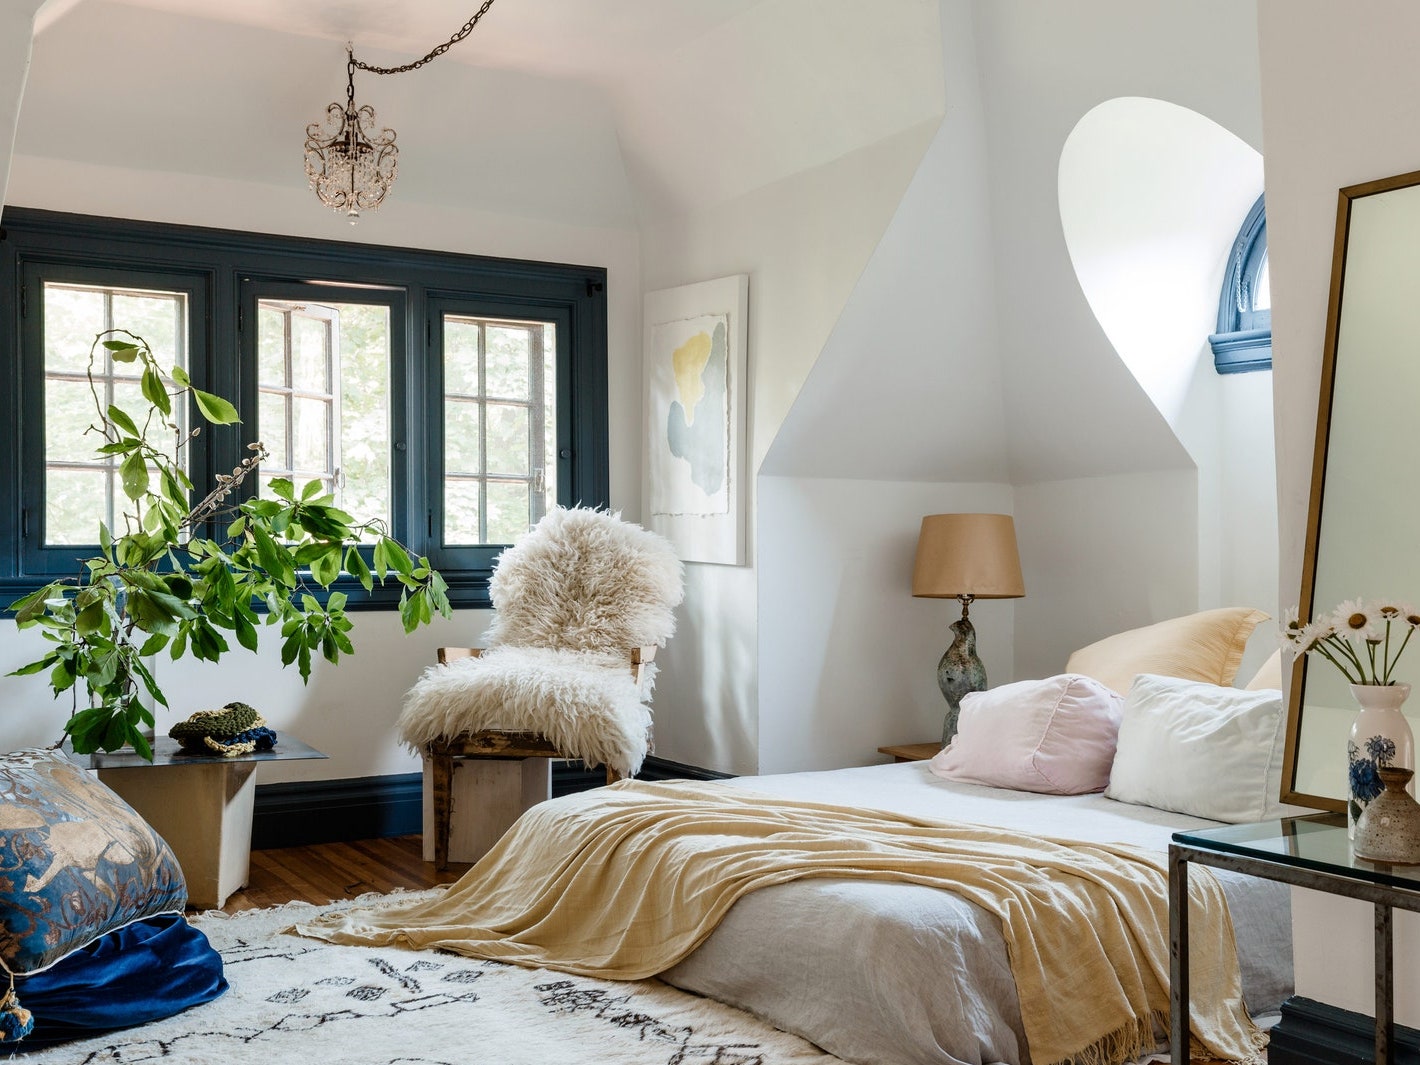 Bedroom carpet ideas – 10 cozy flooring styles for your sleep space